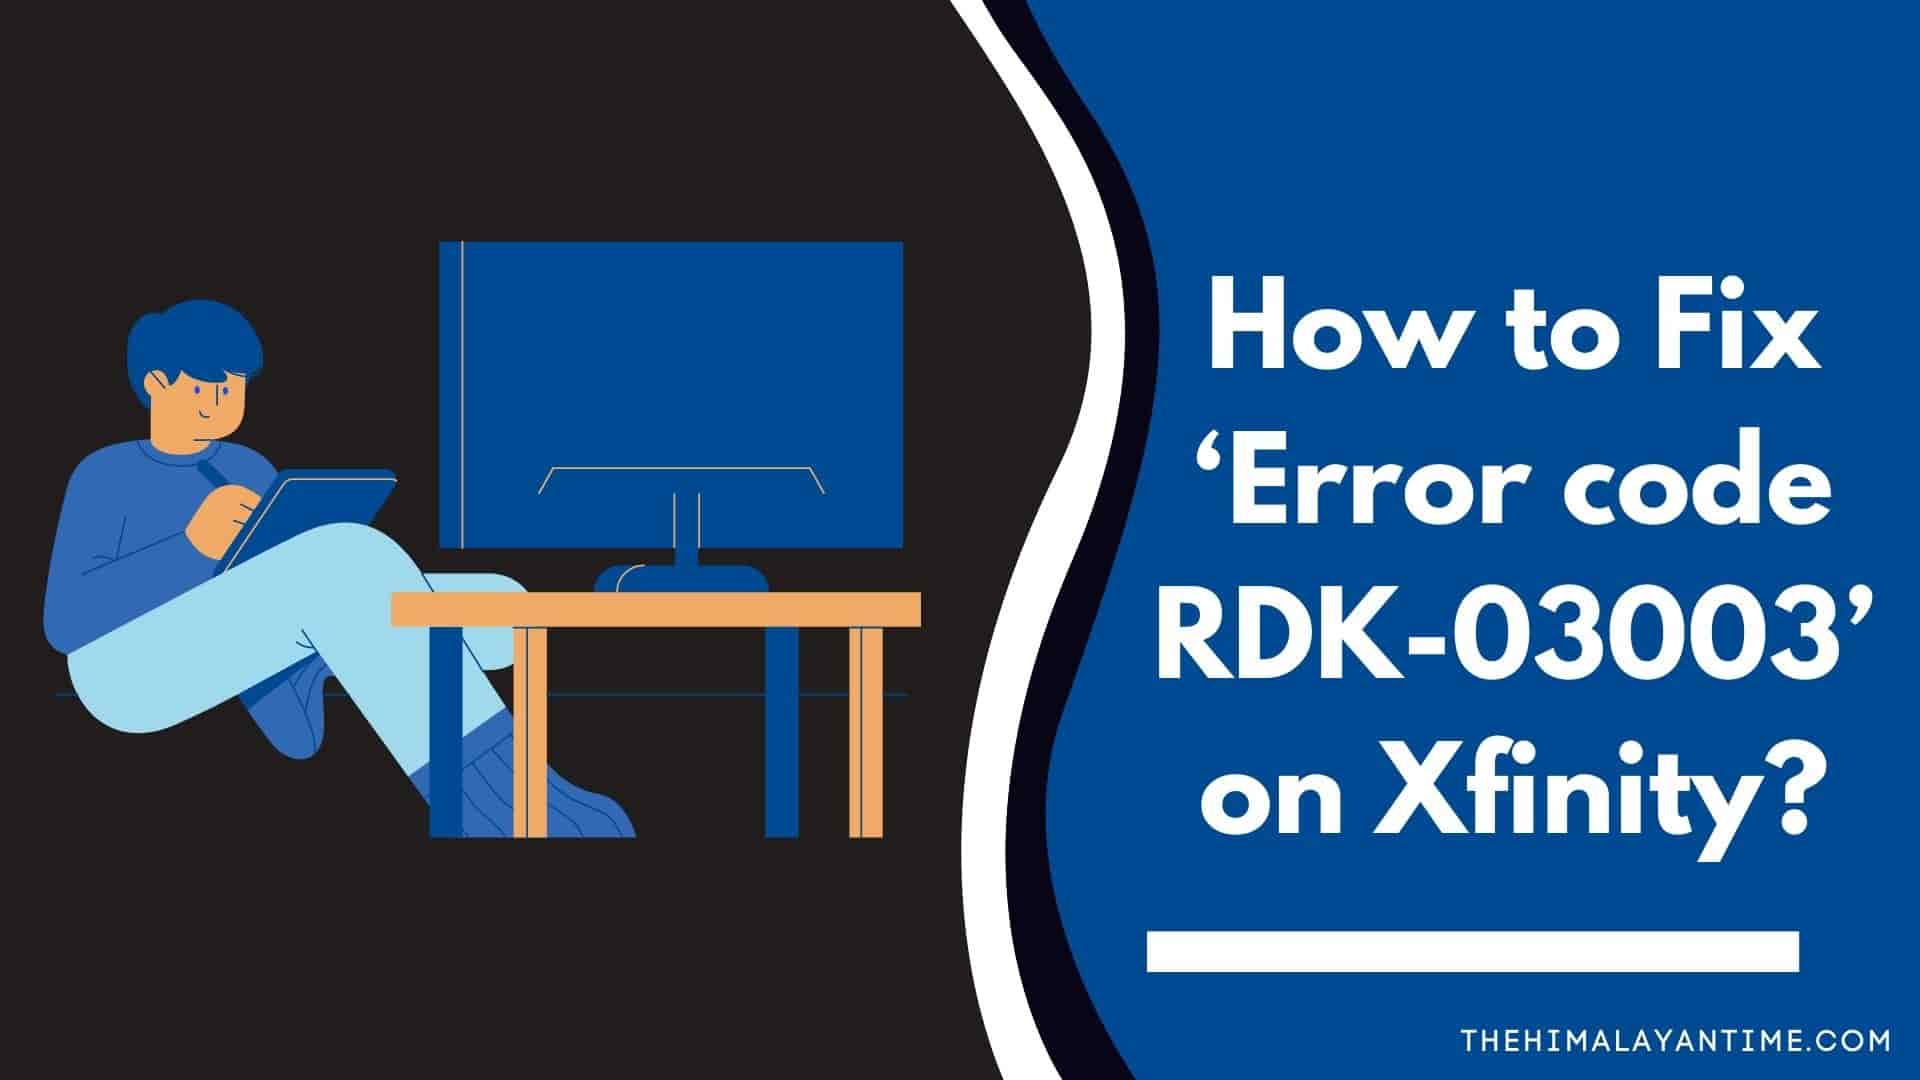 How to Fix ‘Error code RDK-03003’ on Xfinity?